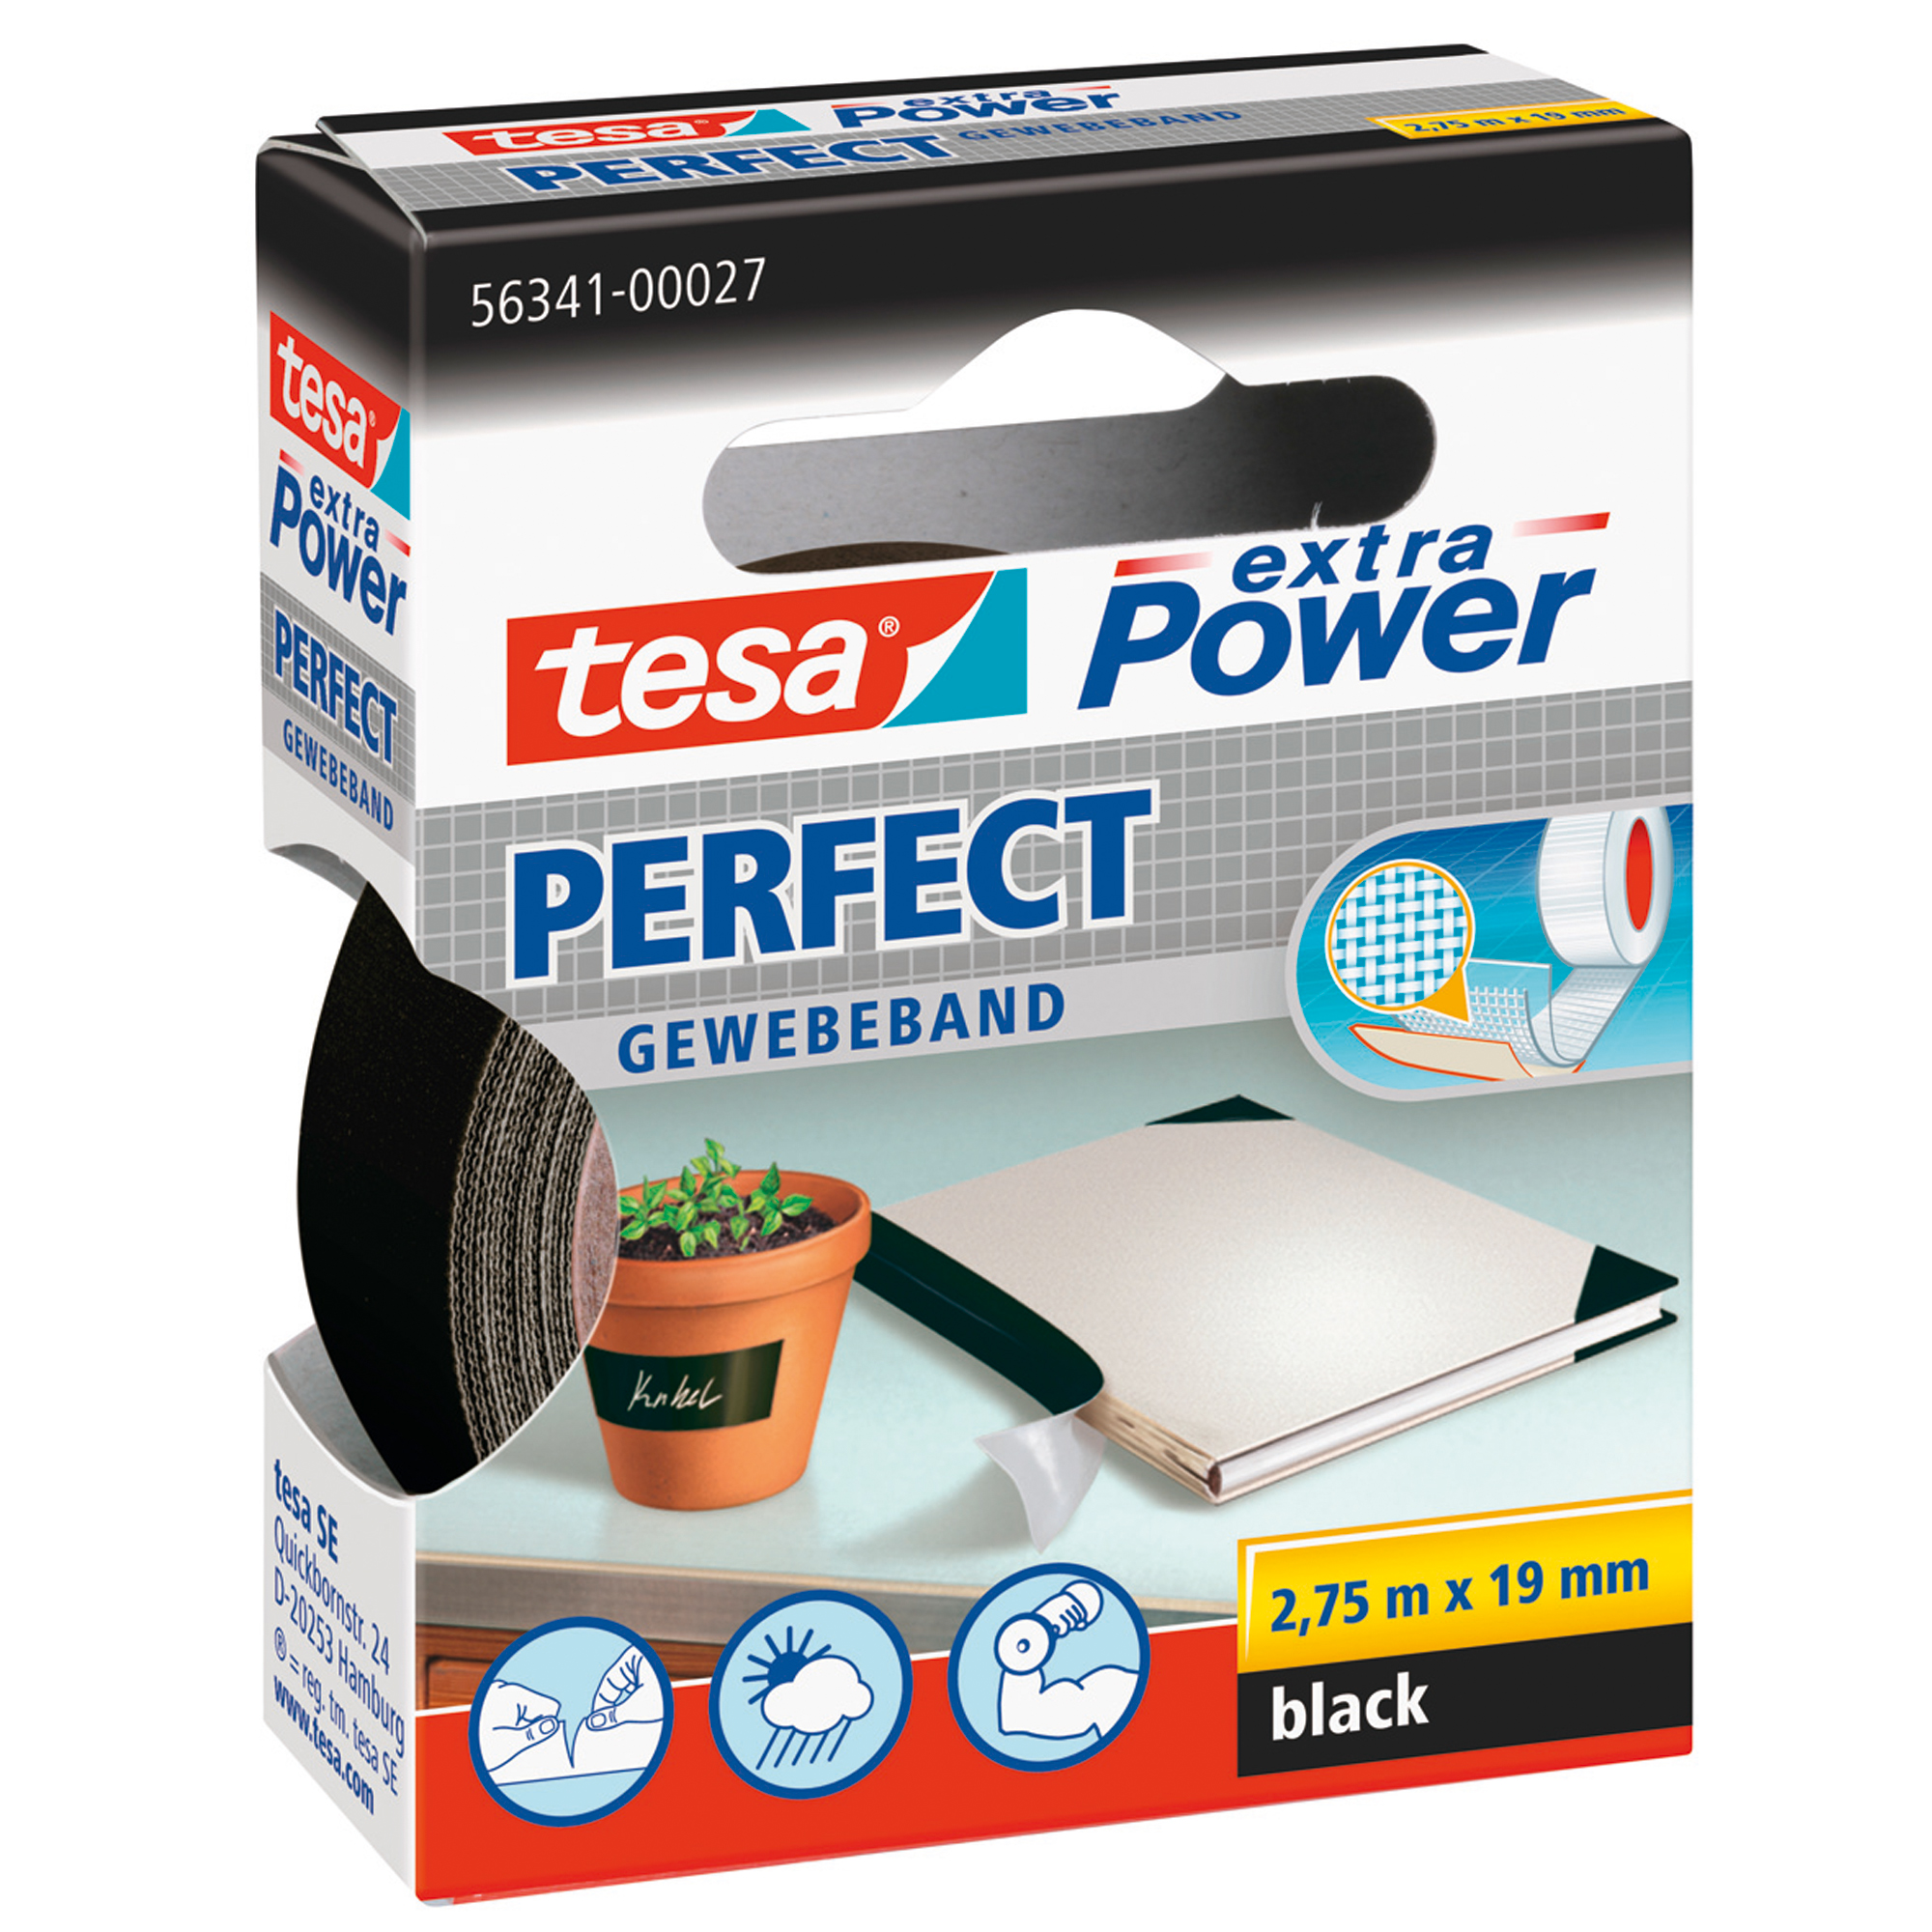 tesa® Gewebeband extra Power® Perfect 19 mm schwarz